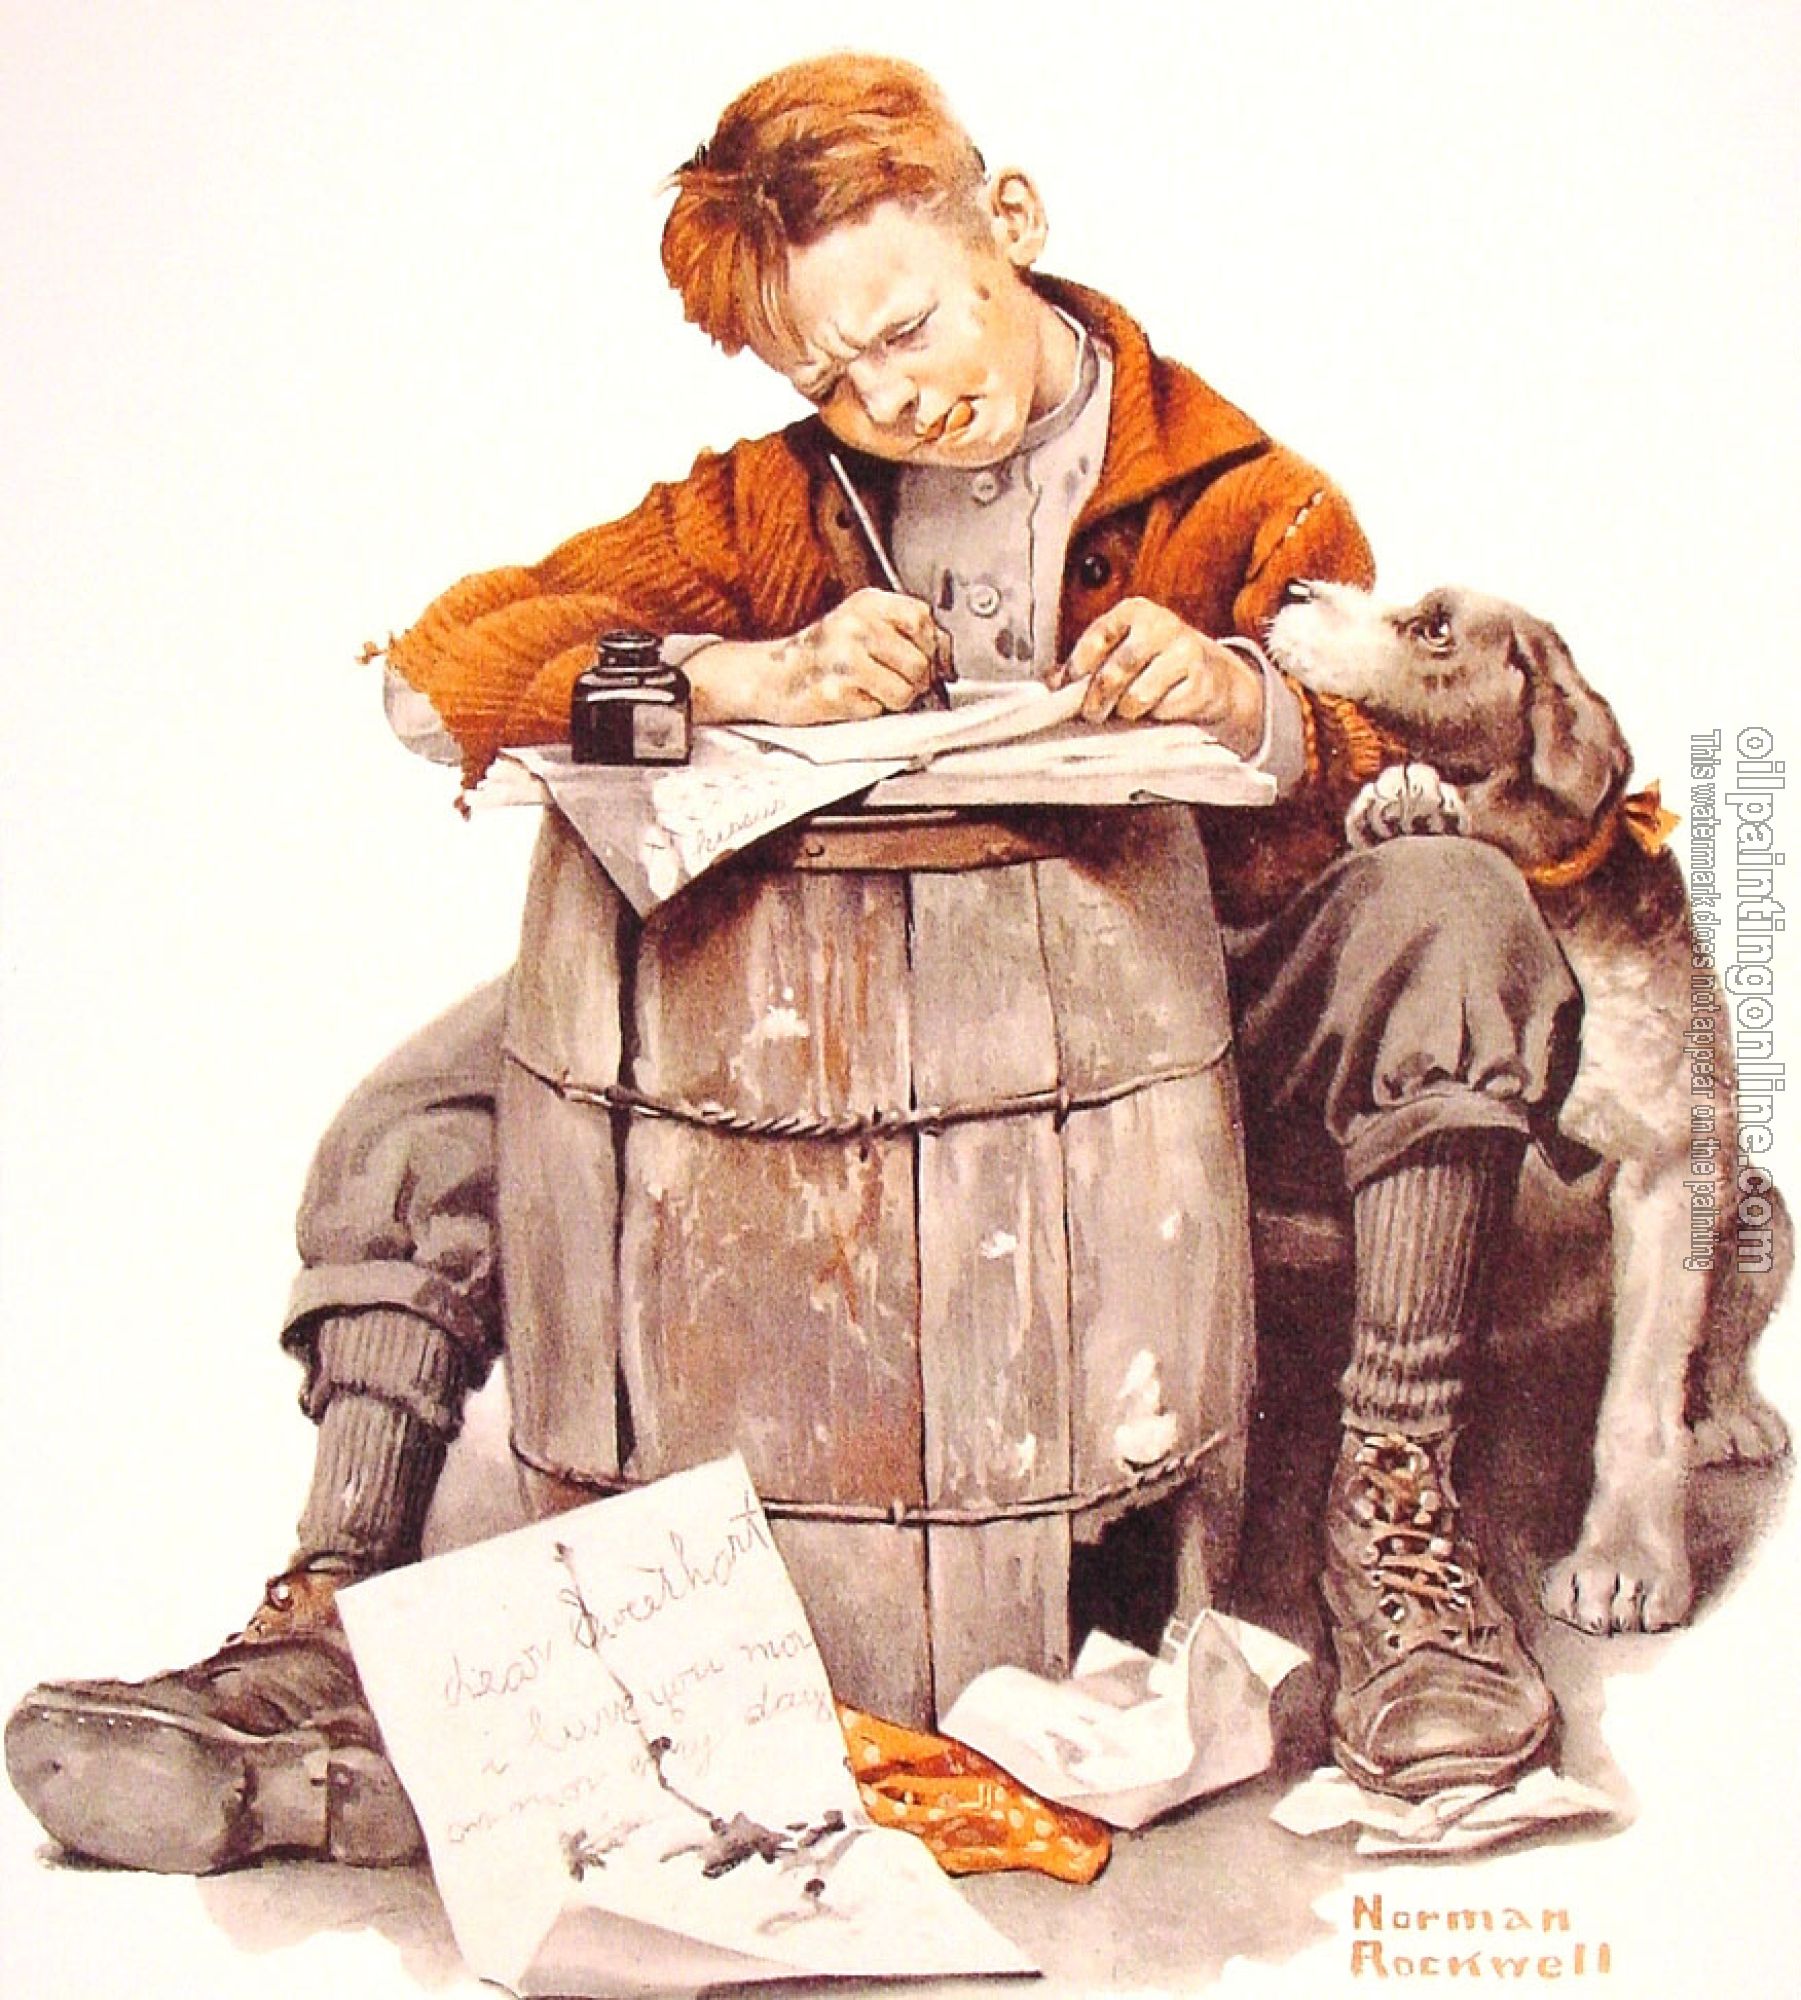 Rockwell, Norman - Little boy writing a letter